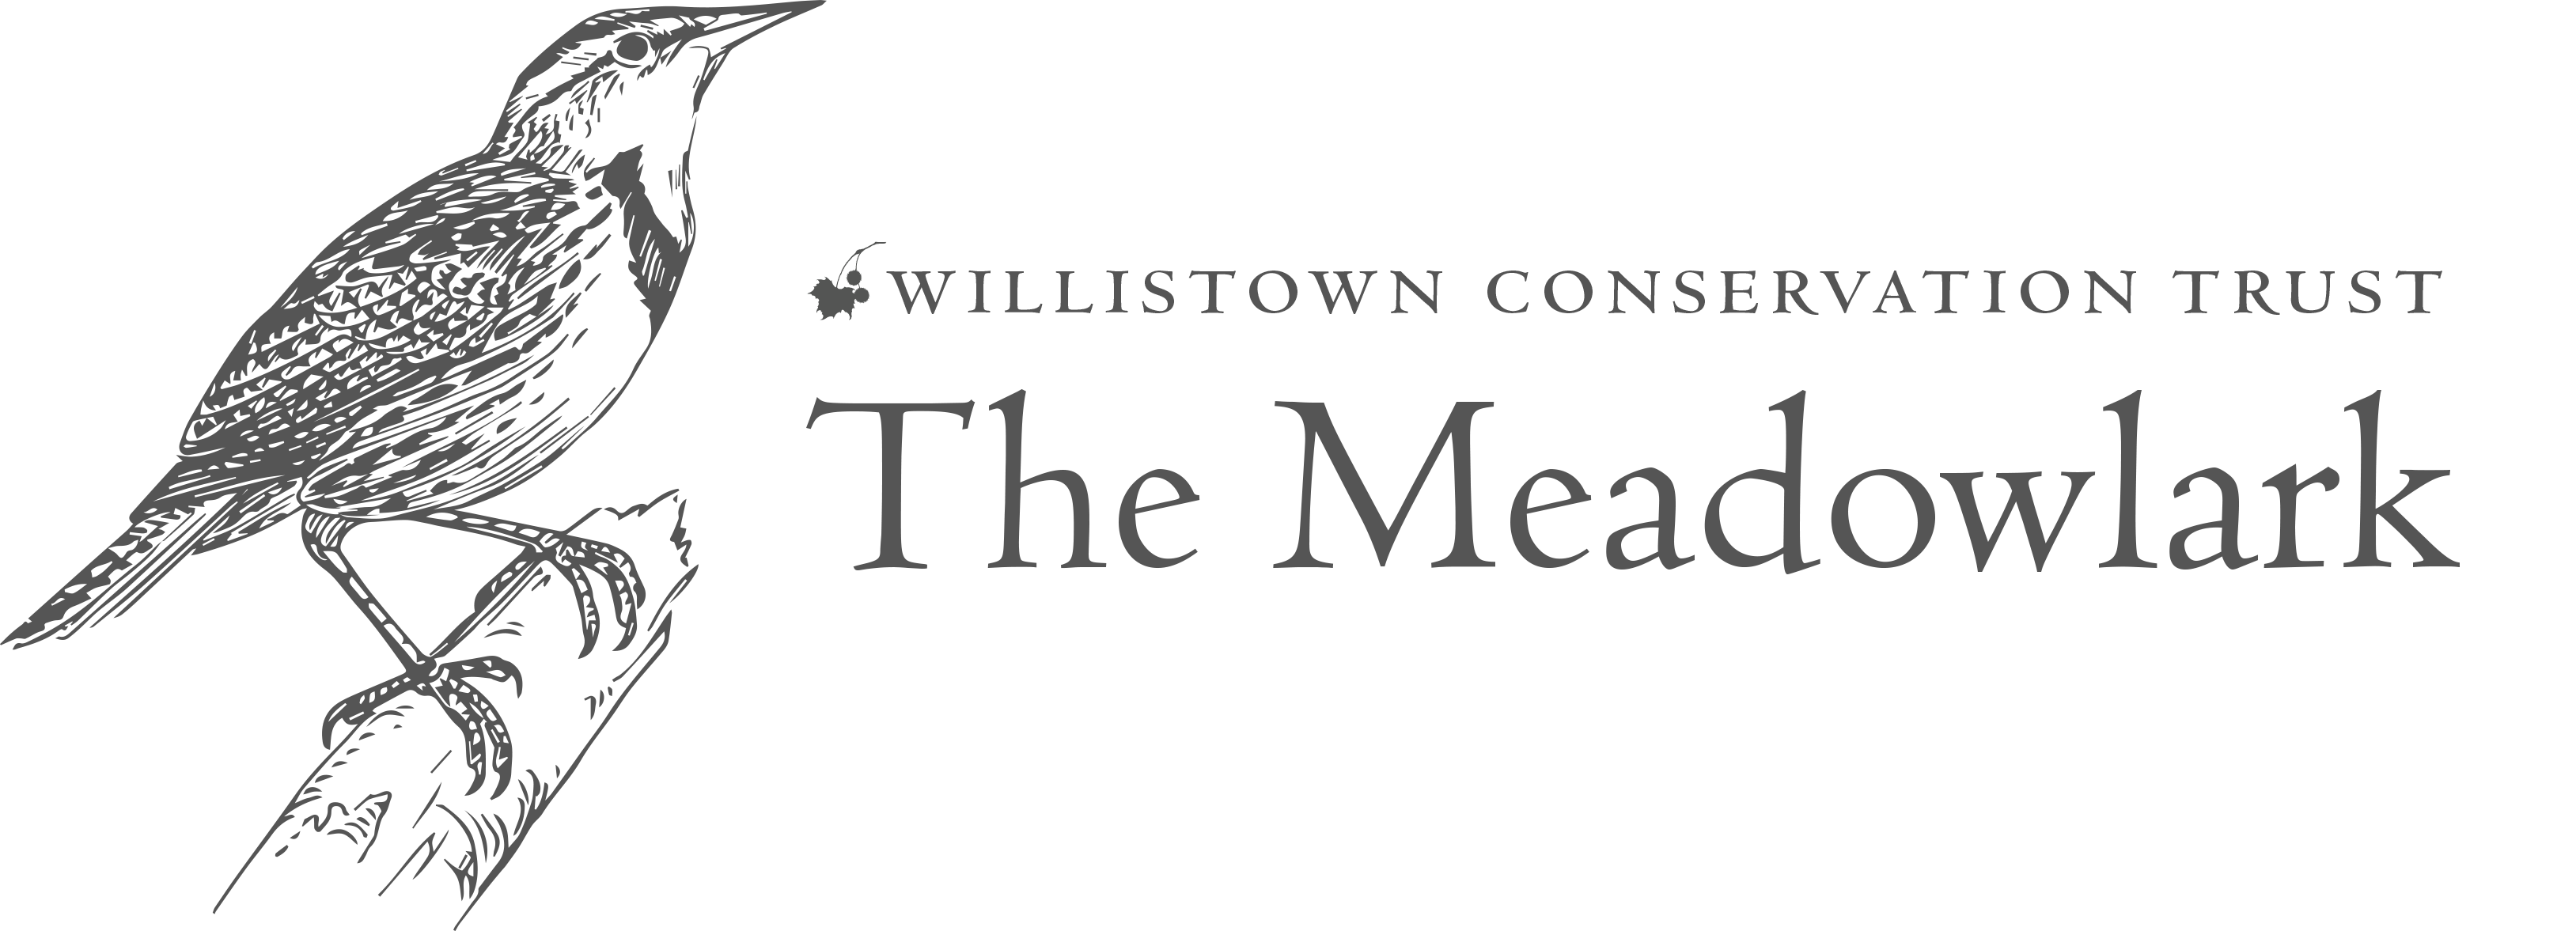 2020 Meadowlark Newsletter Graphic